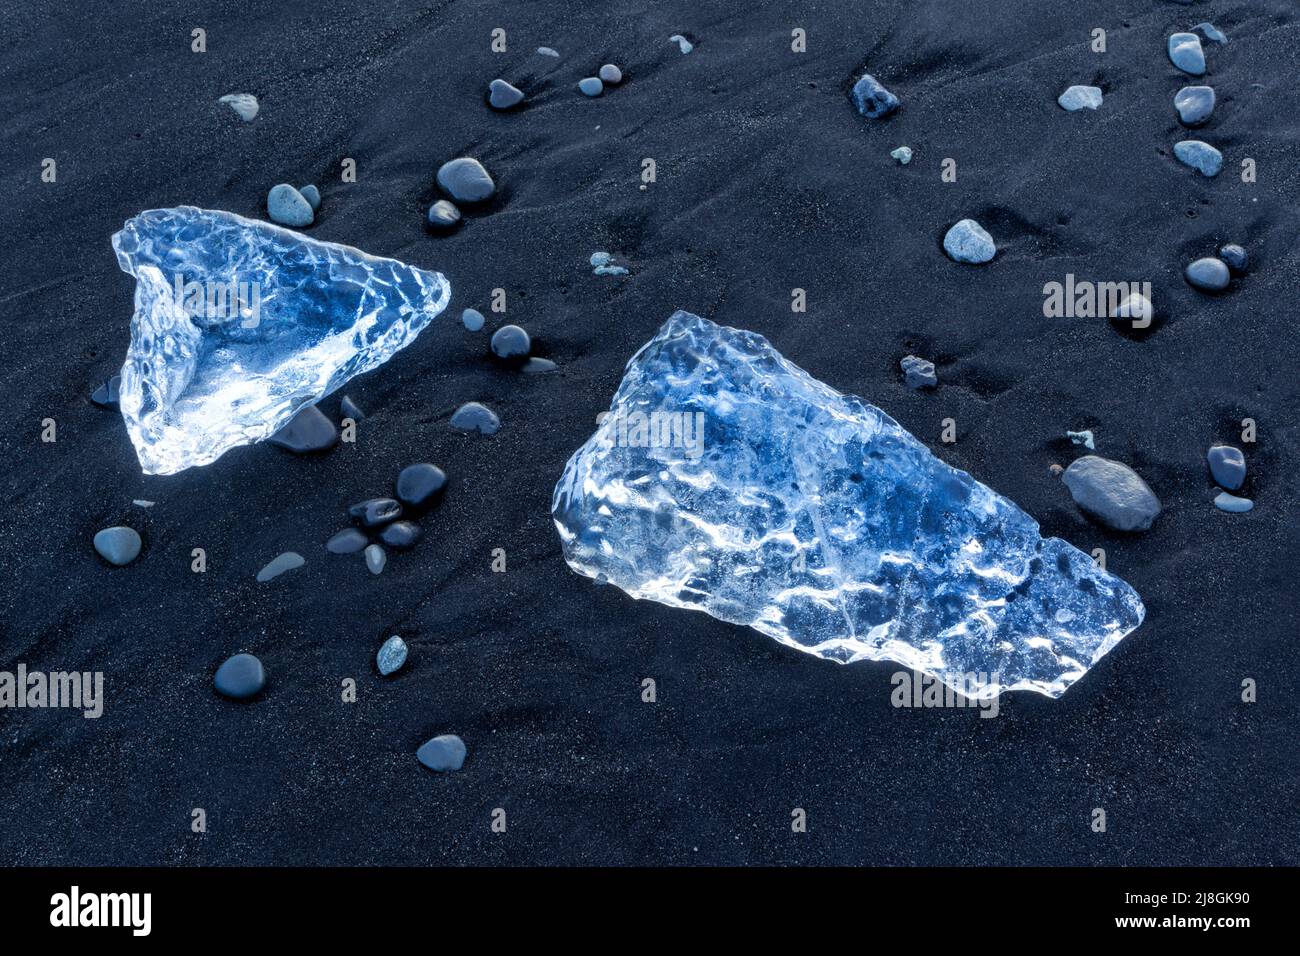 Iceberg fragments washed up on the beach at Jökulsarlön where icebergs flow out of Jökulsarlön lagoon in Iceland.  Sometimes called diamond beach. Stock Photo